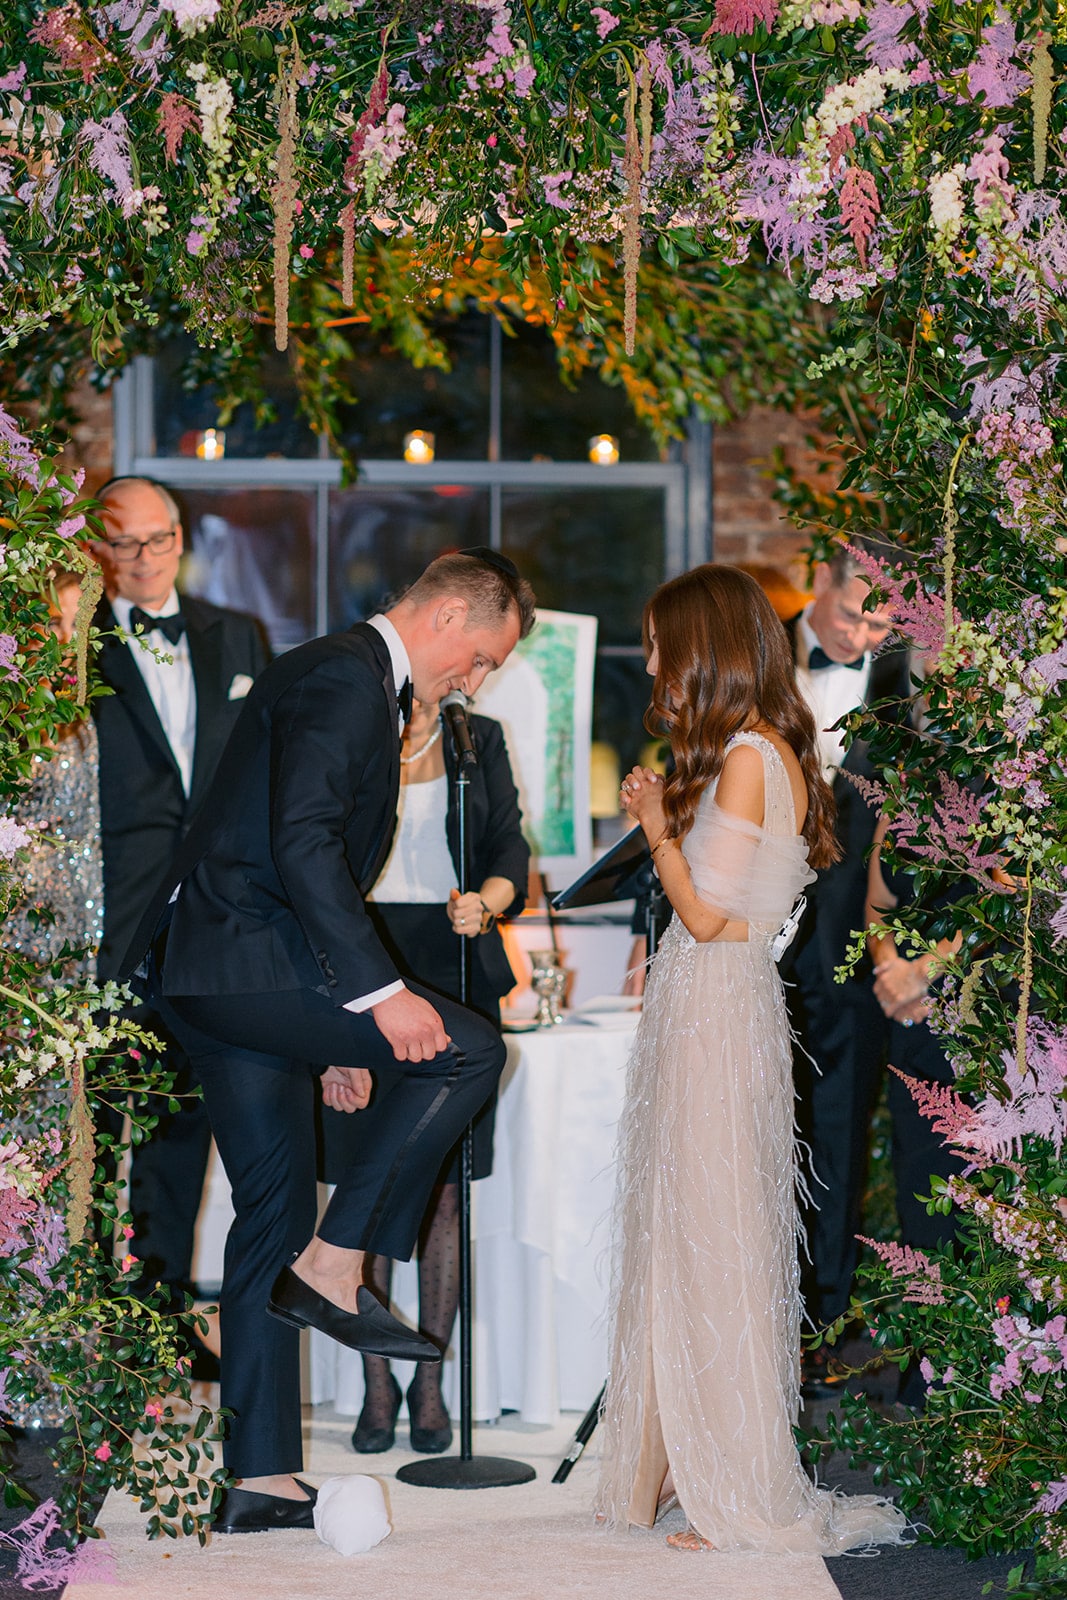 Chuppah by Rachel Cho Florals - Tribeca Rooftop Wedding - Larisa Shorina Photography - Elegant luxury weddings in New York, Italy, Destinations